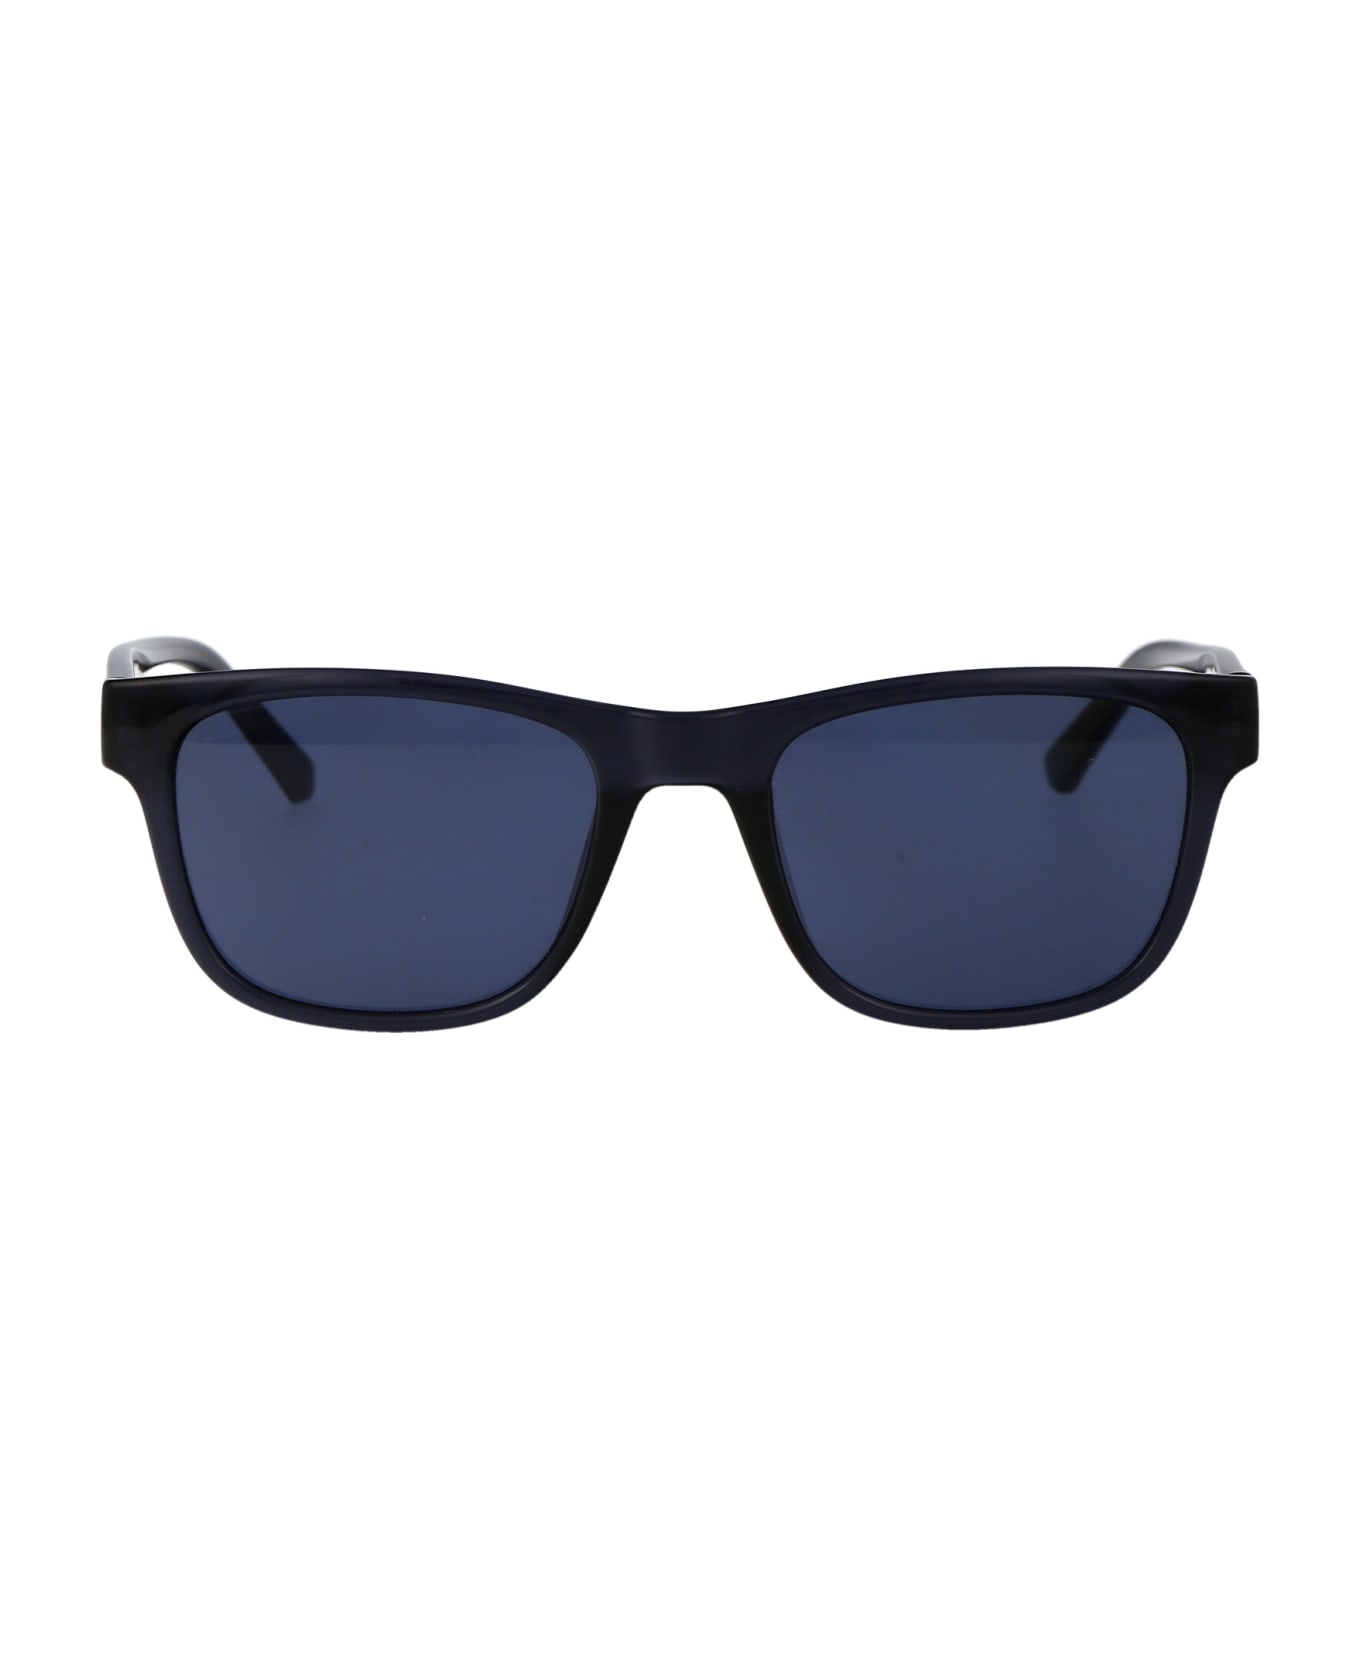 Calvin Klein Jeans Ck20632s Sunglasses - 405 BLACK BLUE